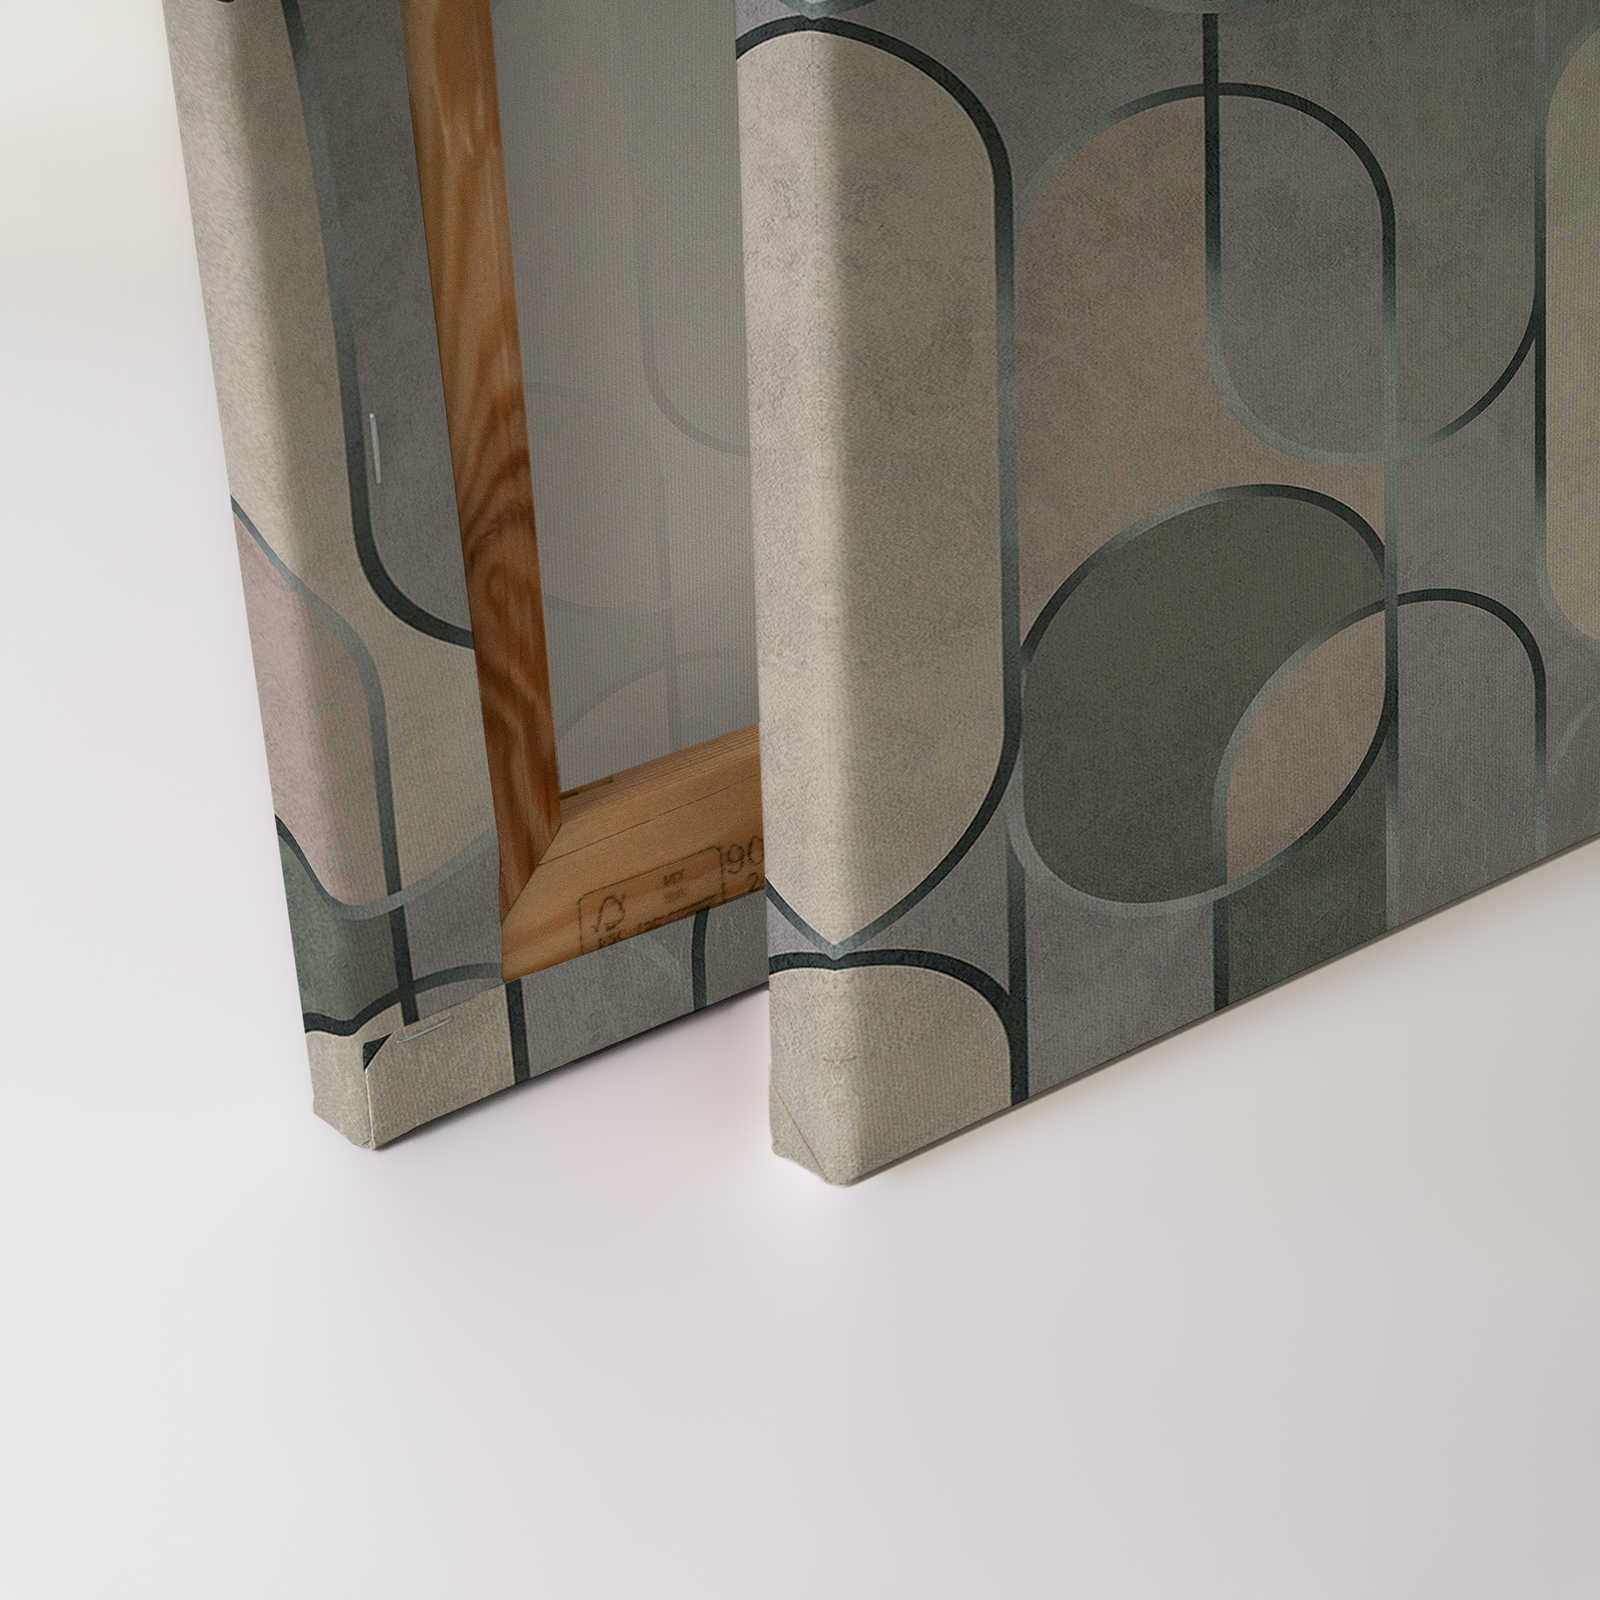             Ritz 2 - Leinwandbild Retro Stil, Grau & Grün mit Metallic Details – 1,20 m x 0,80 m
        